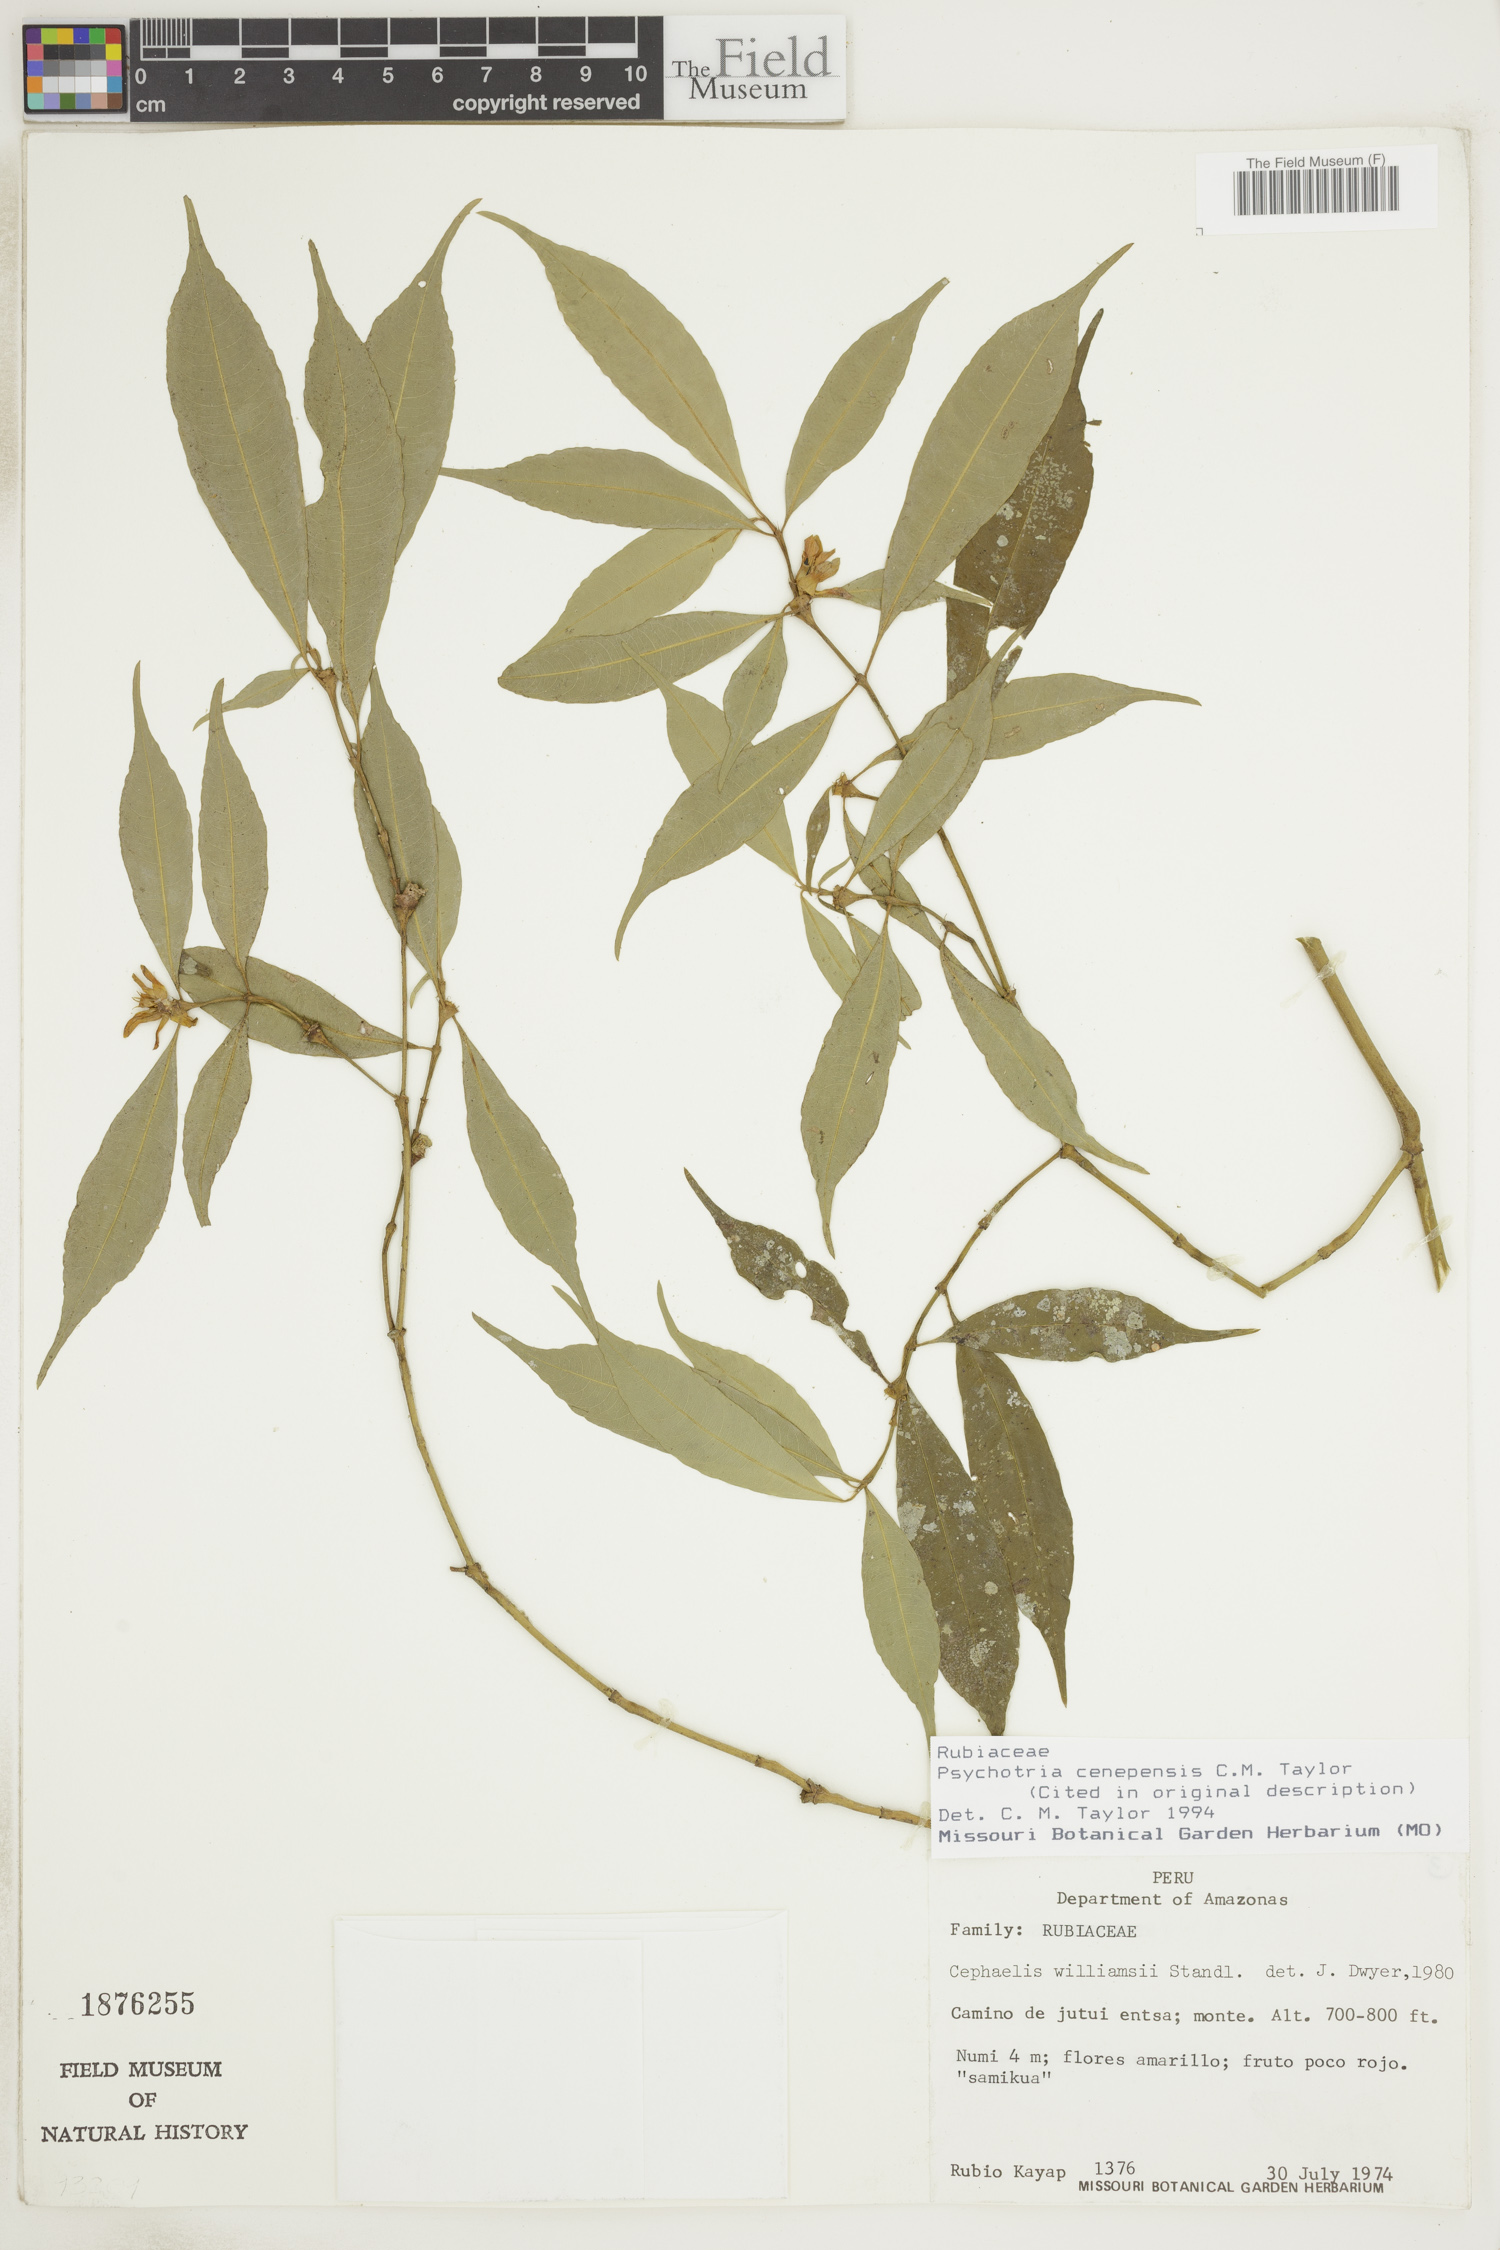 Psychotria cenepensis image